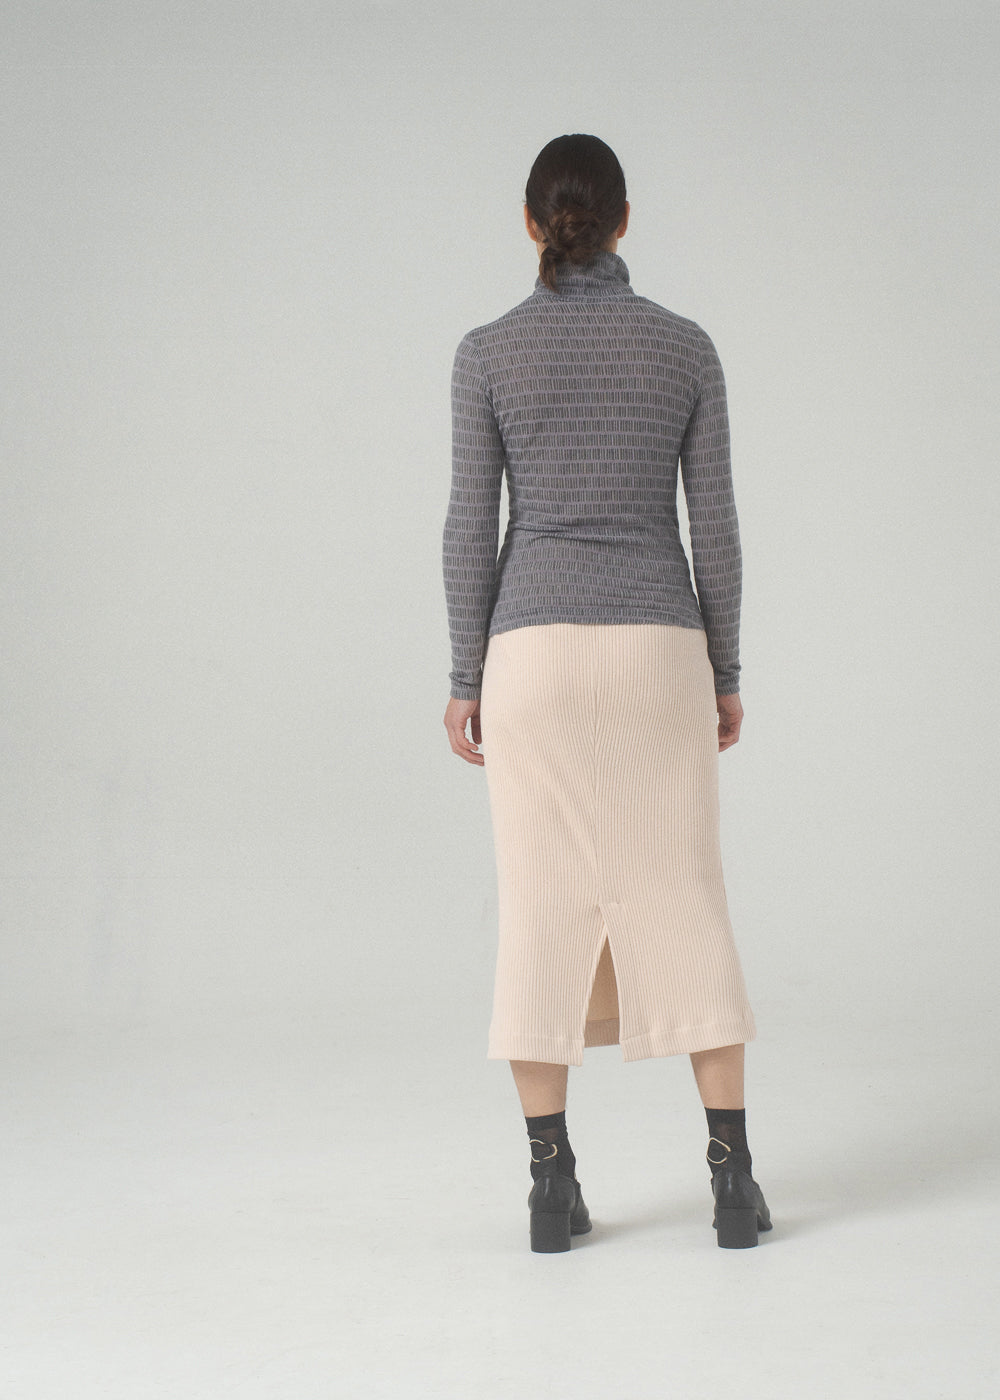 SAMPLE SALE - Anja Skirt in Ivory Rib Knit - SMALL